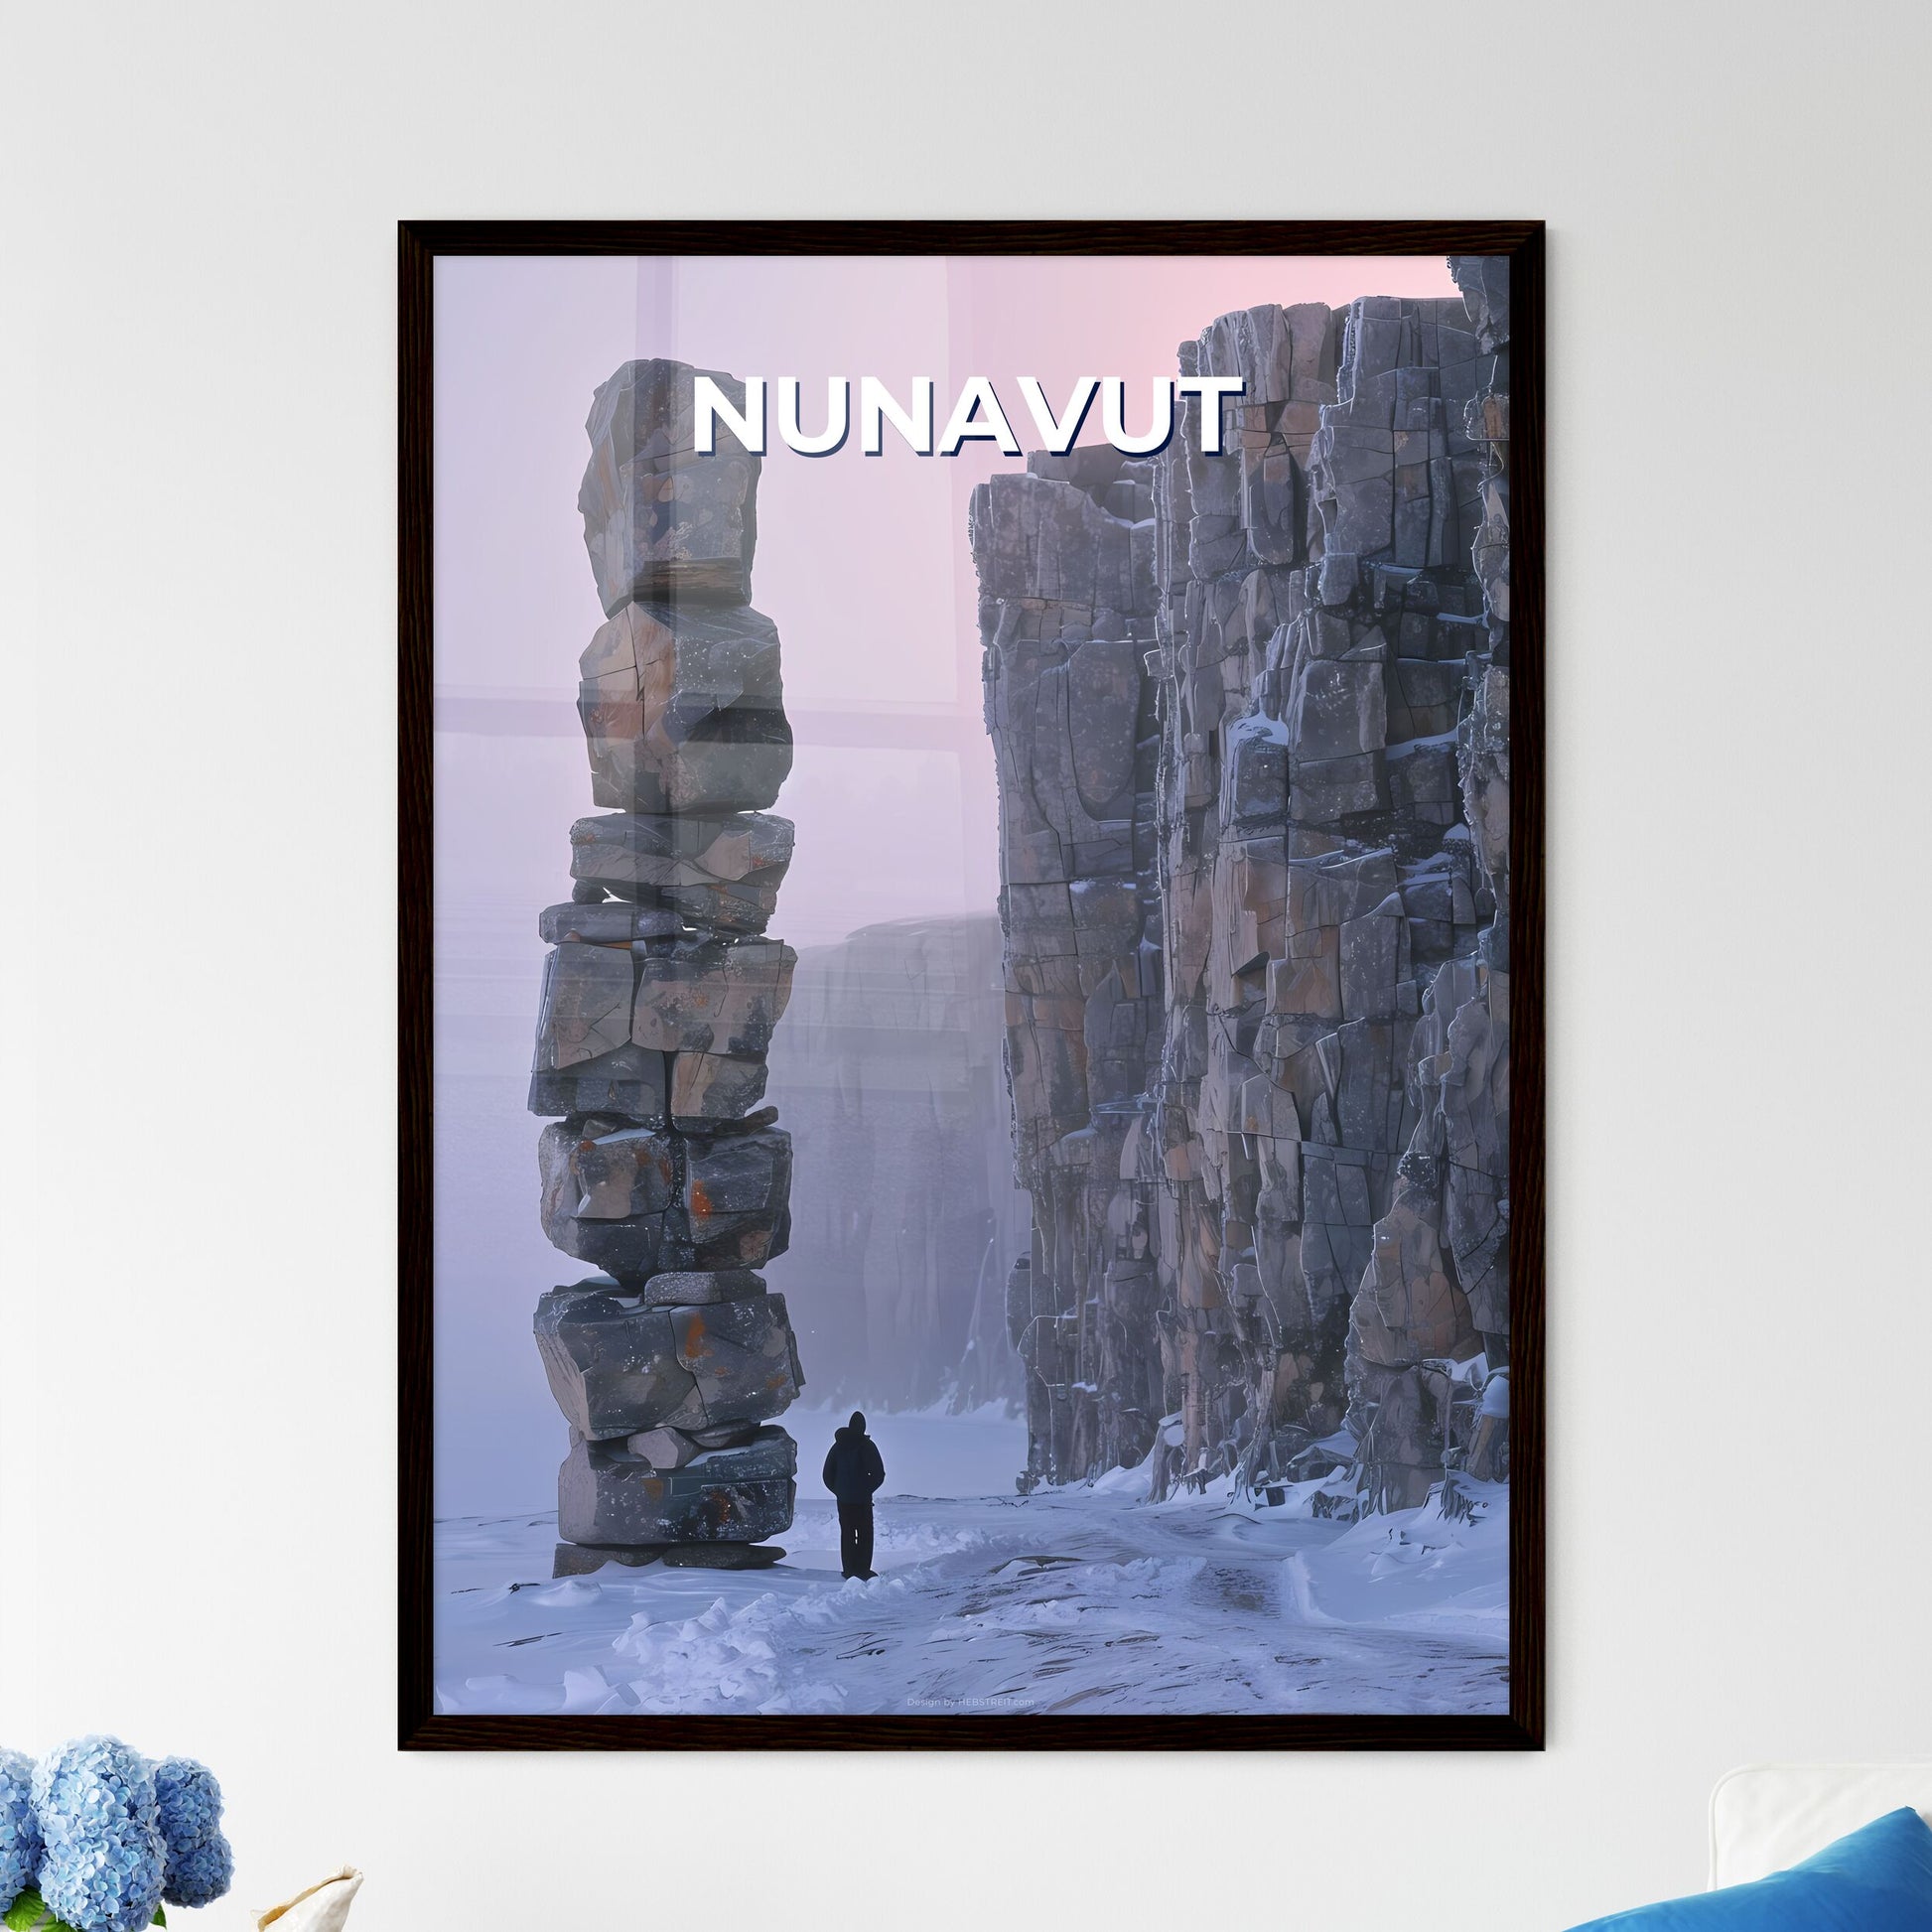 Nunavut Landscape Painting - Vibrant Artwork Showcasing Tall Rock Structure